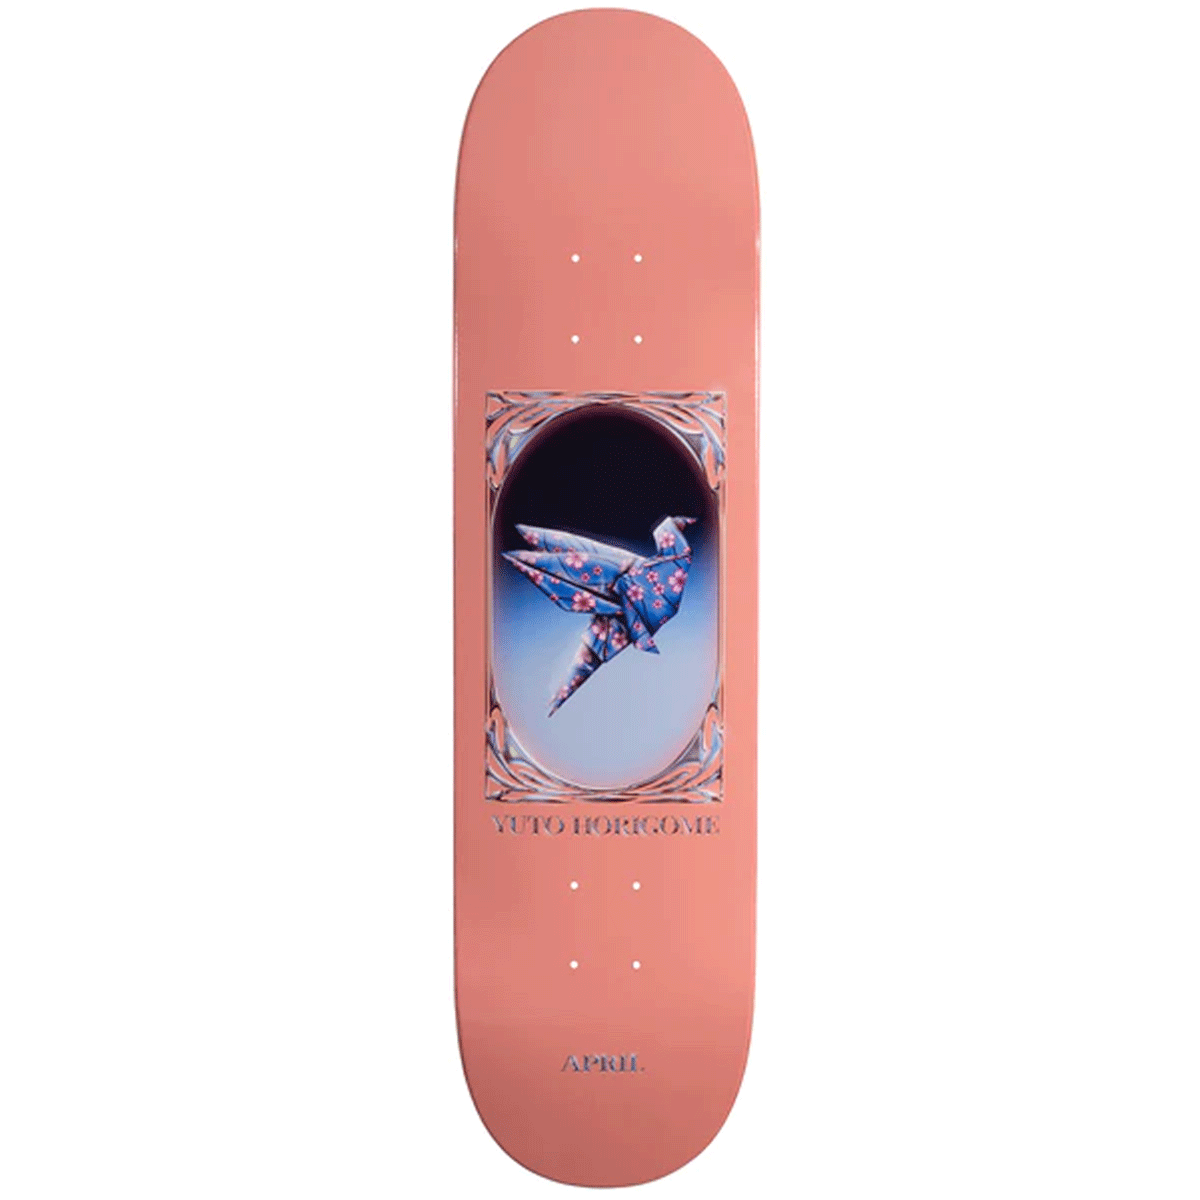 8.25 Aqril skateboards yuto JAPAN deck39sNoahノア90 - スケートボード